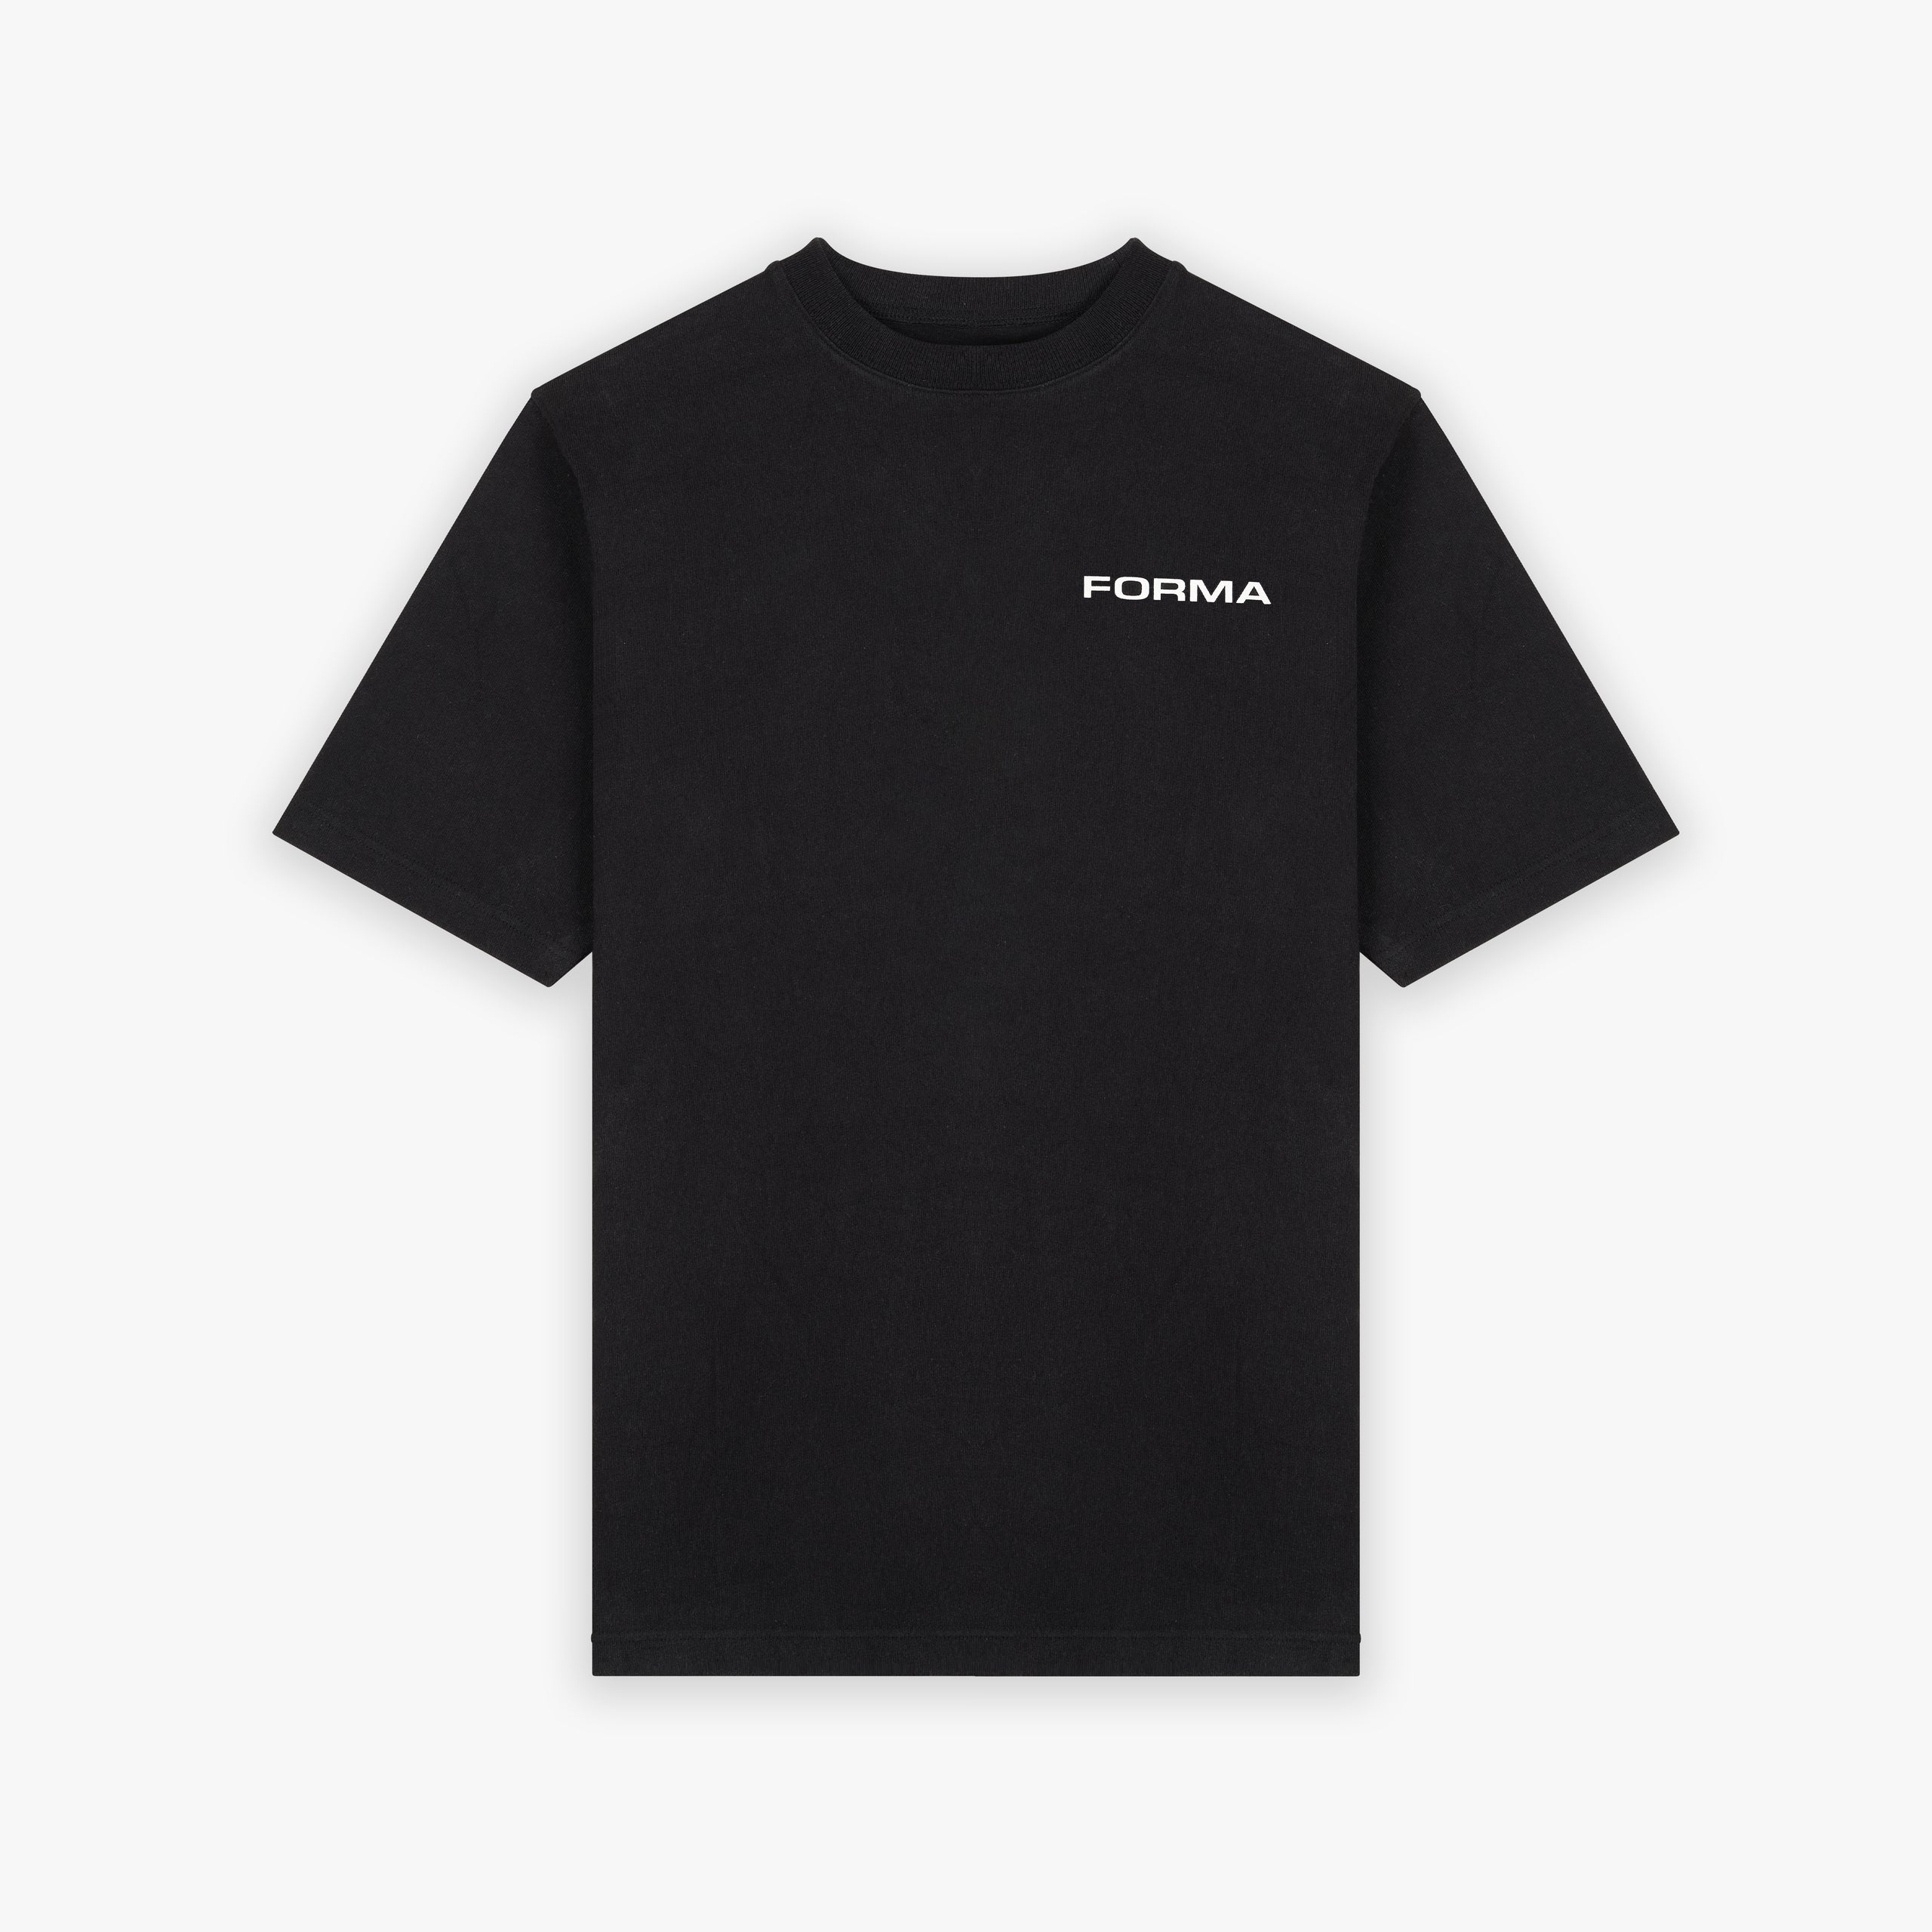 Forma classic black T-shirt